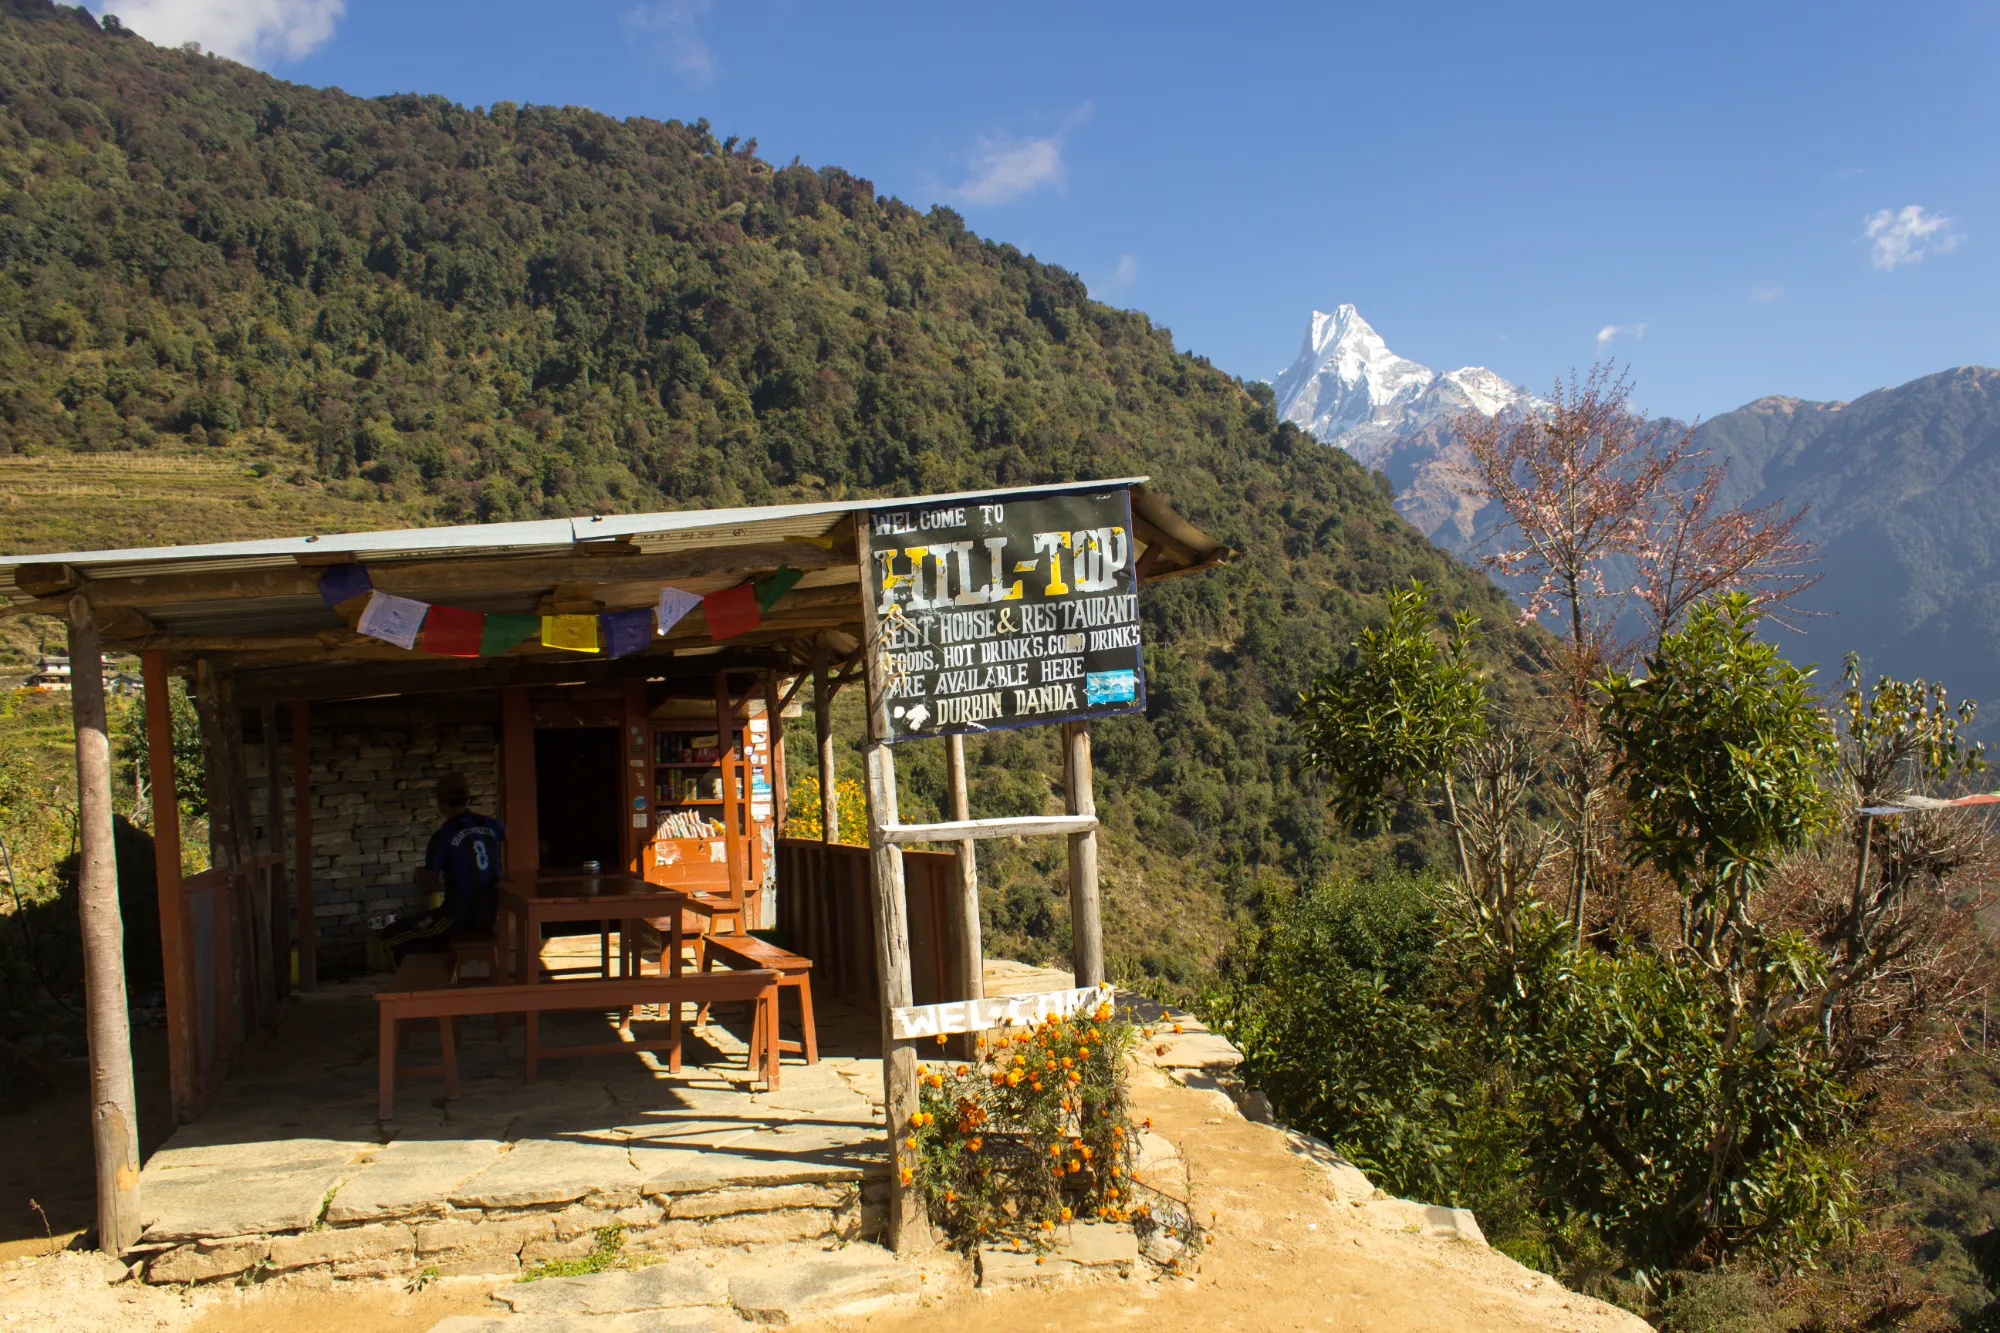 ABC trek drink stop - By Mountain People authentic treks in Nepal